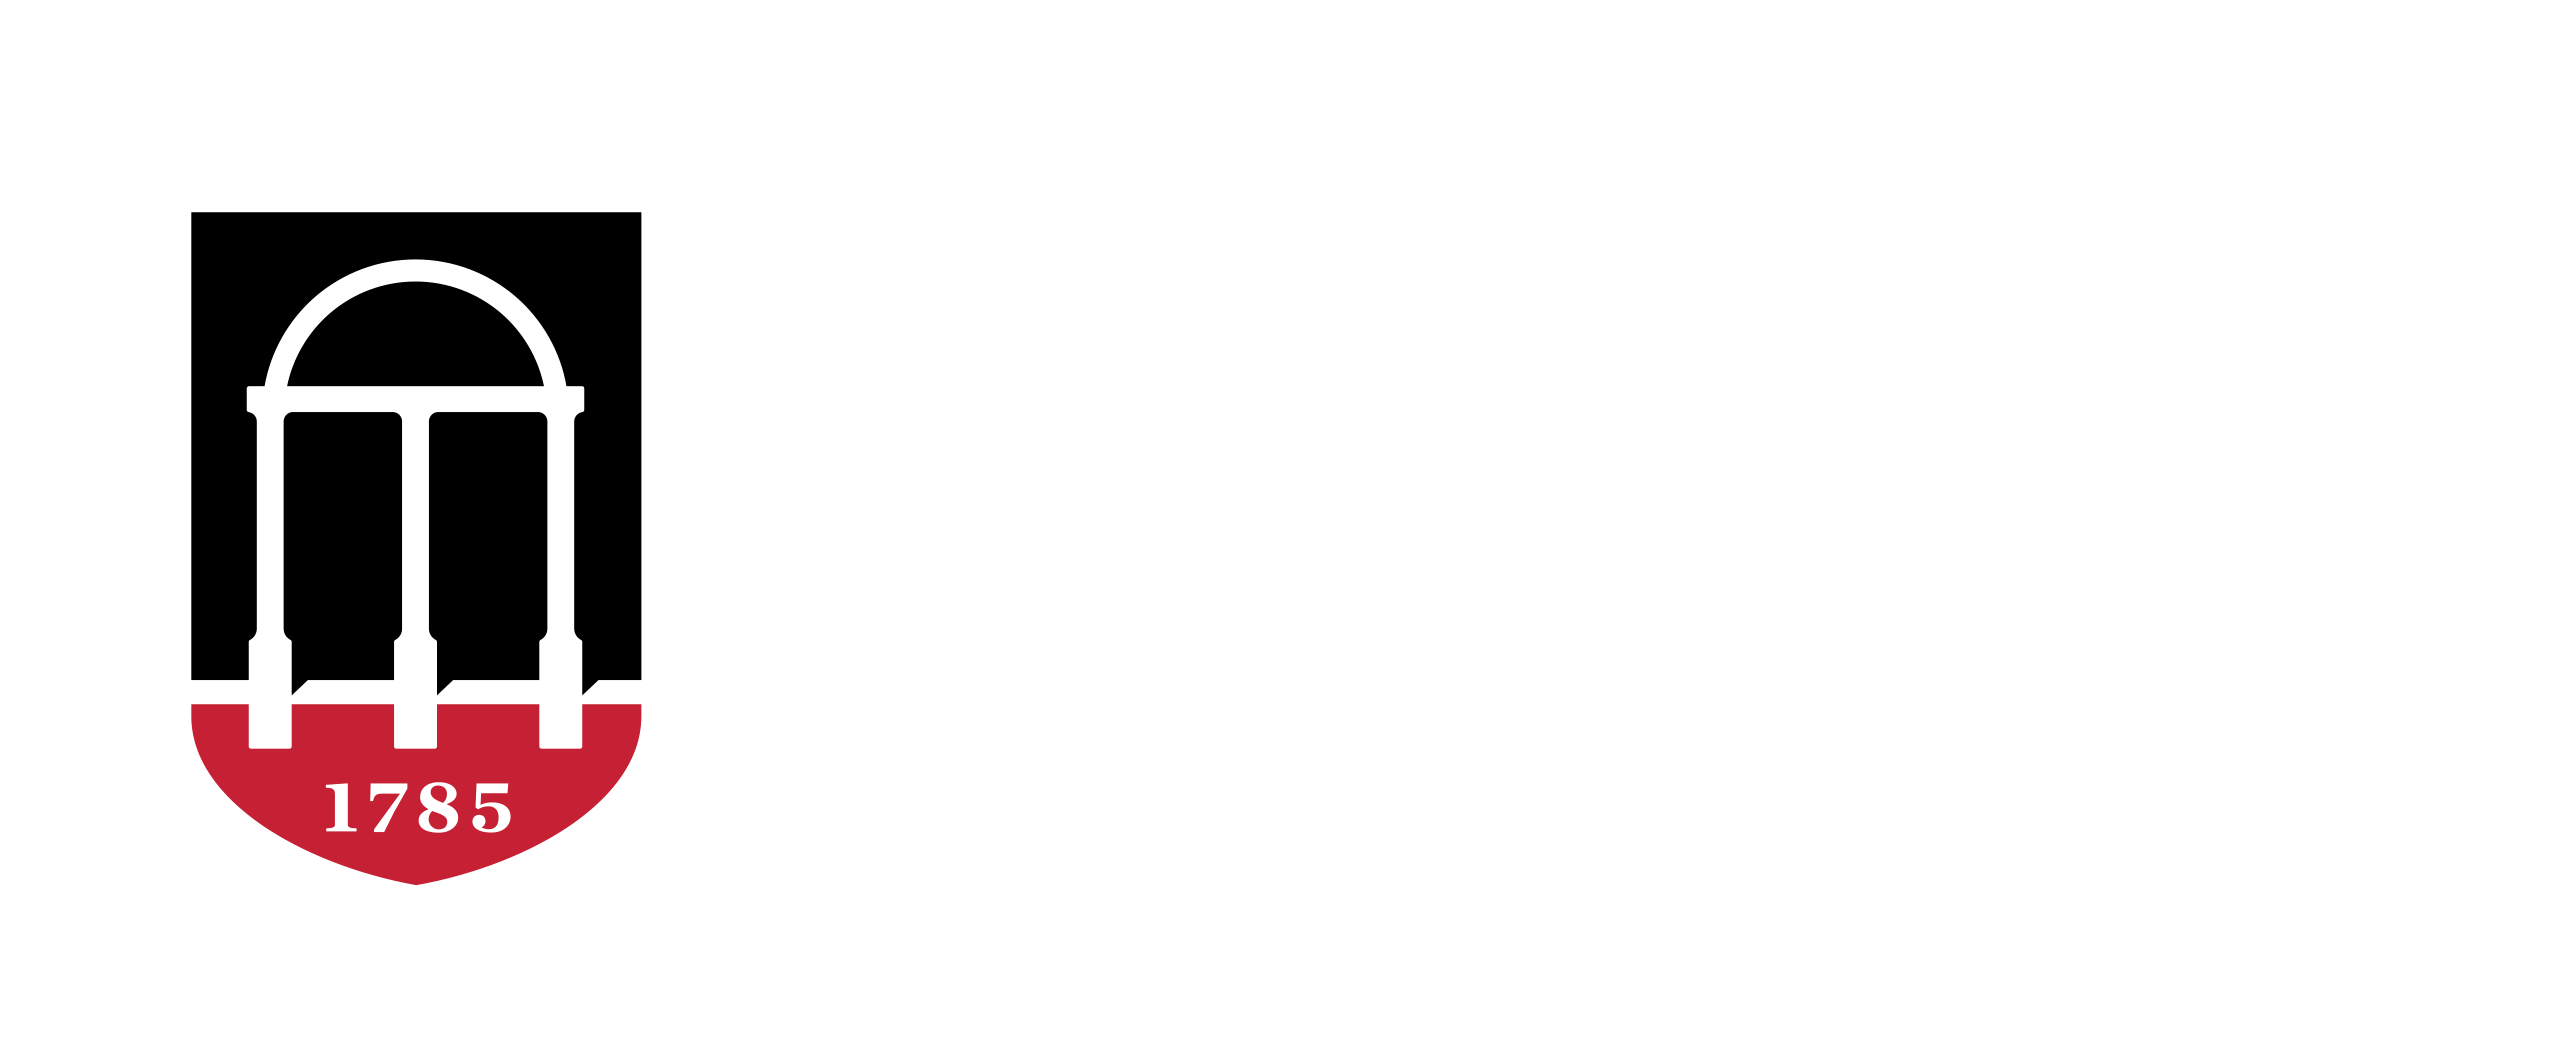 University of Georgia, Office of the President